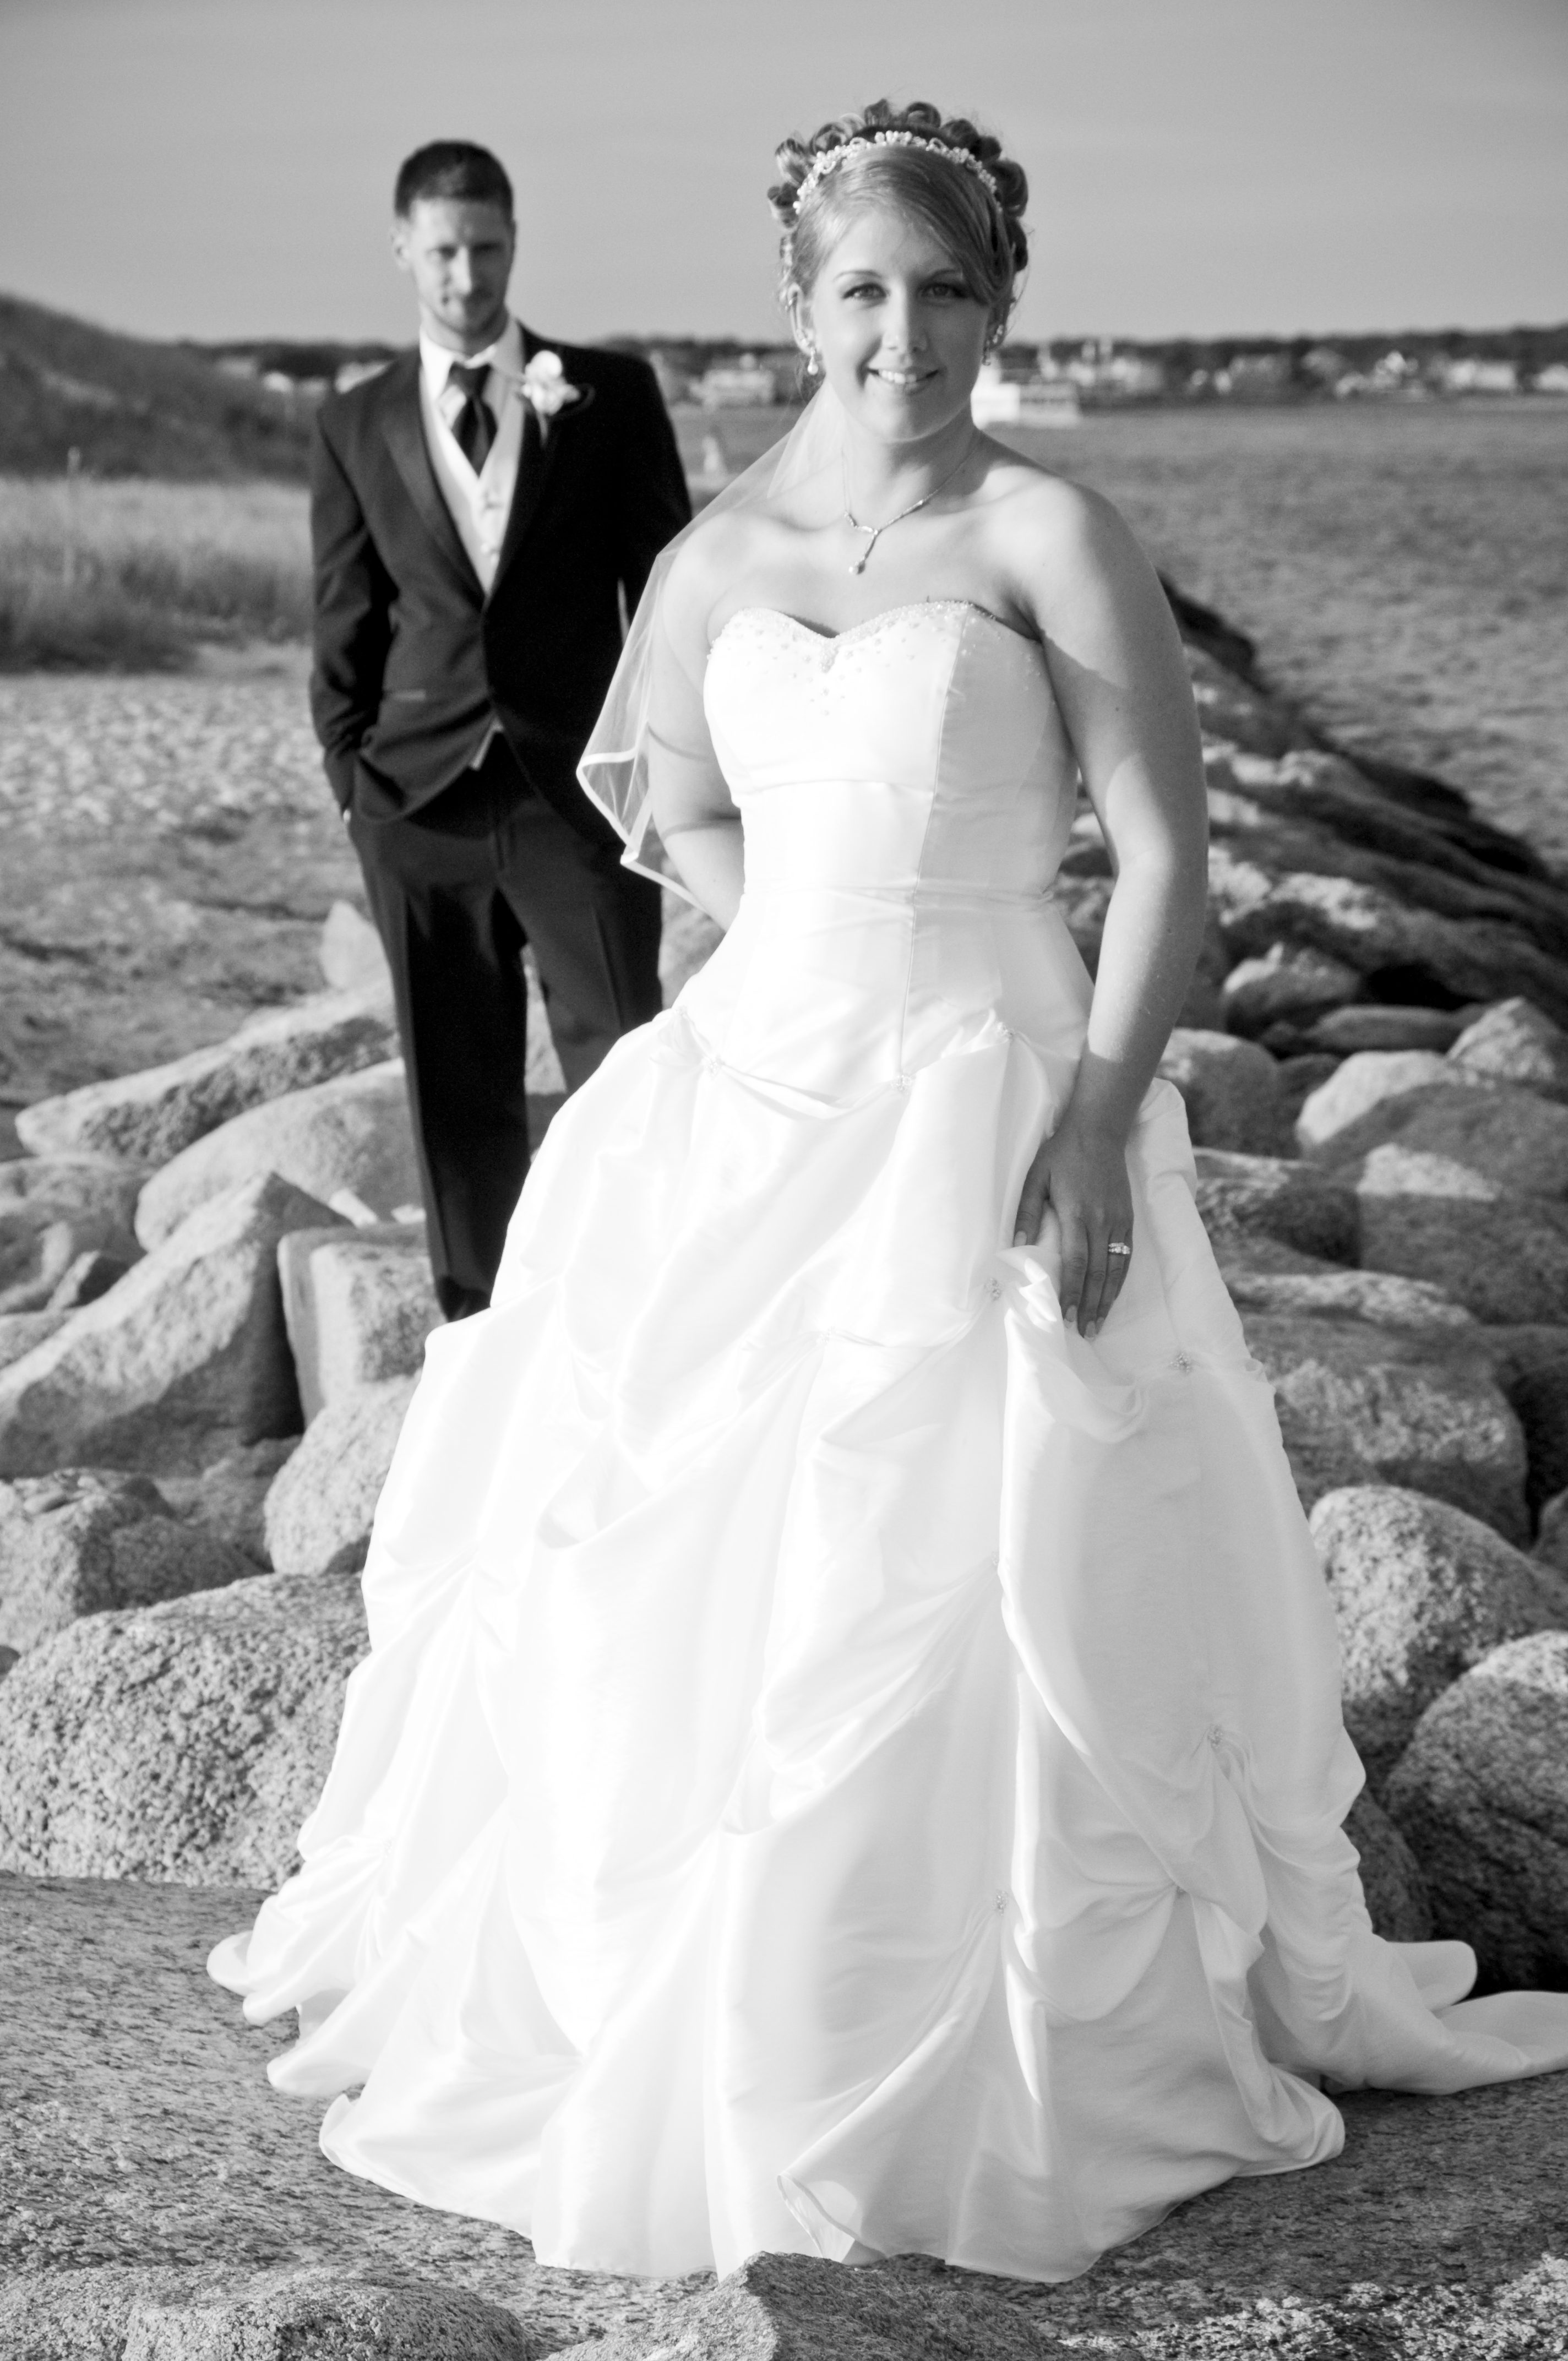 Kalmus Beach Cape Codder Wedding in Hyannis - Sarah Murray Photography